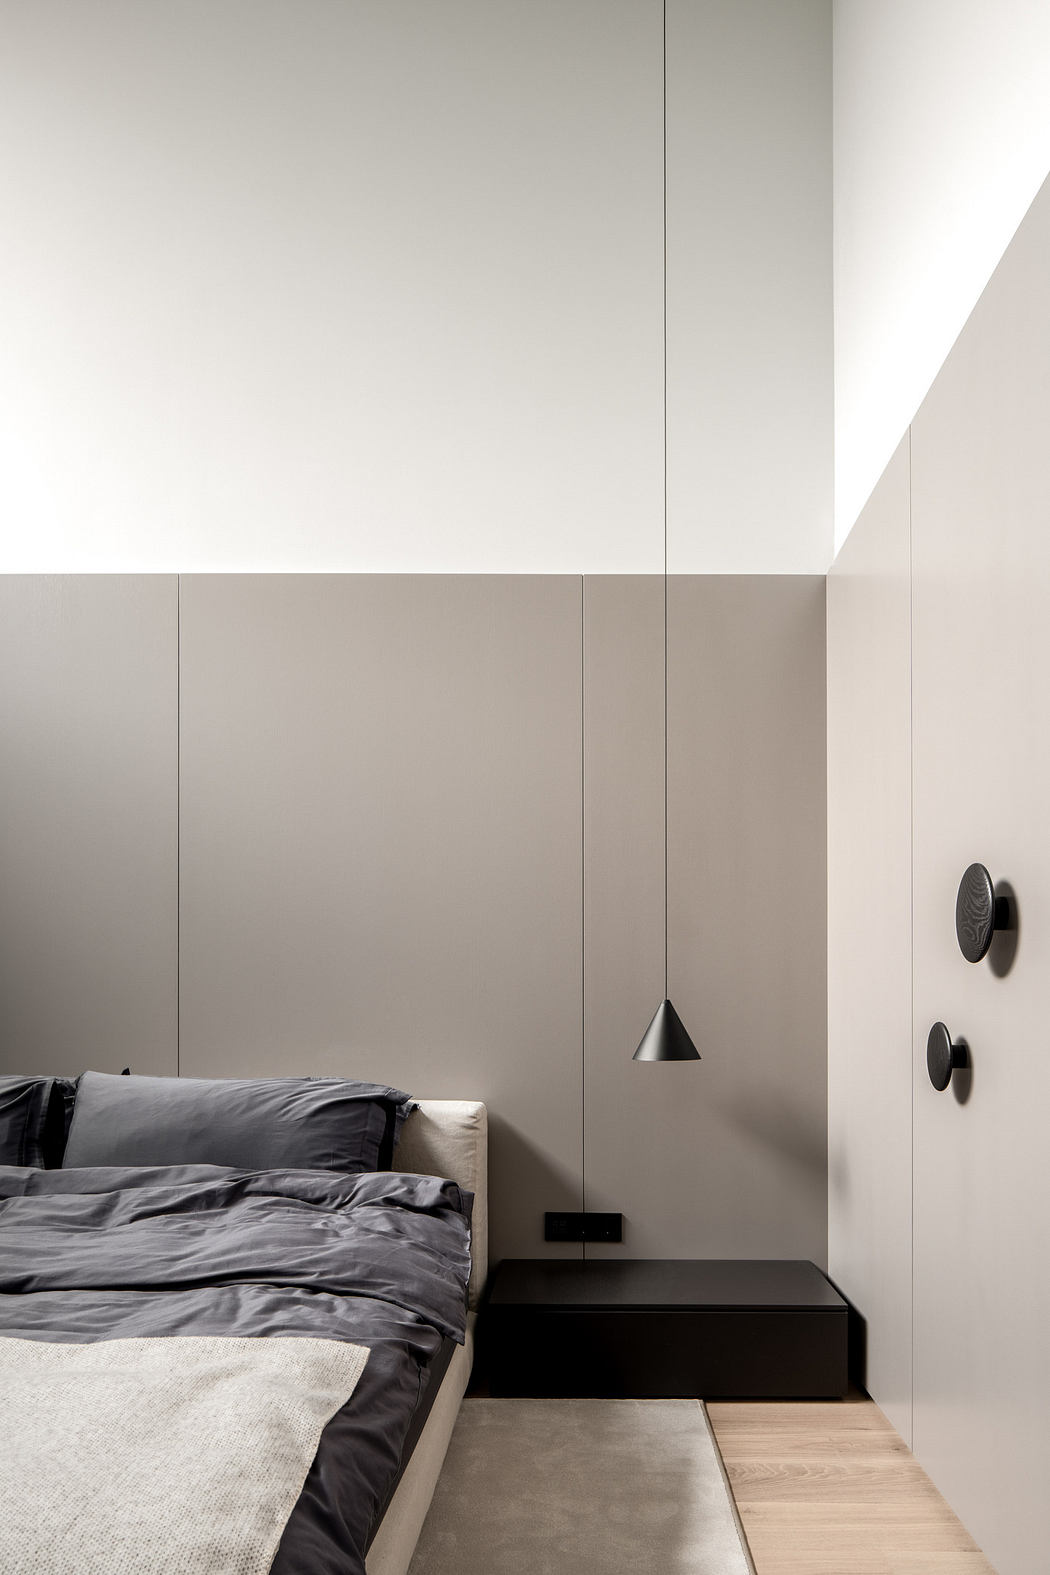 Minimalist bedroom with monochromatic tones and sleek design.